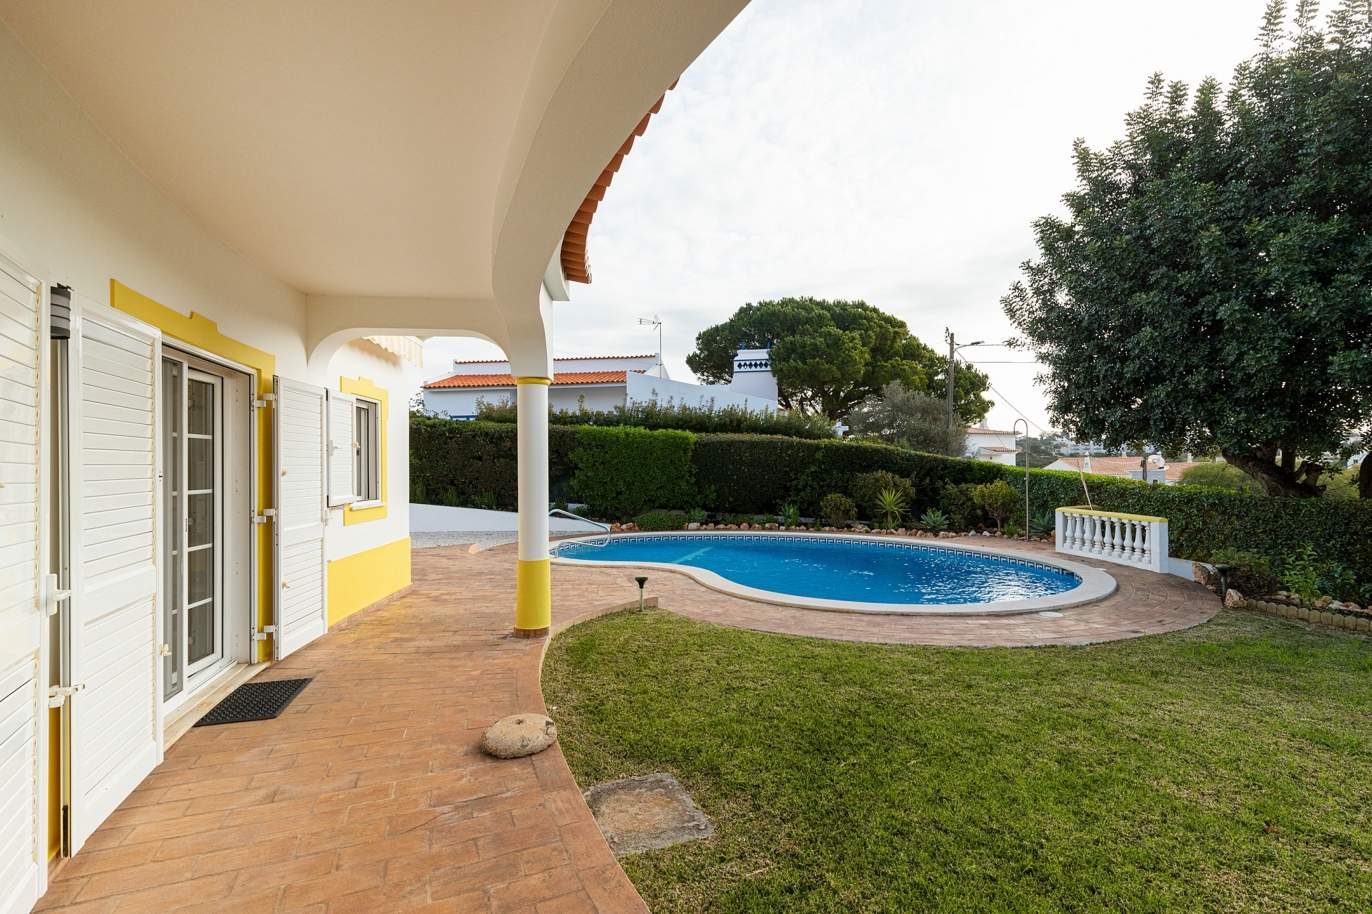 5 Bedroom Villa, near the beach, for sale in Carvoeiro, Algarve_191914